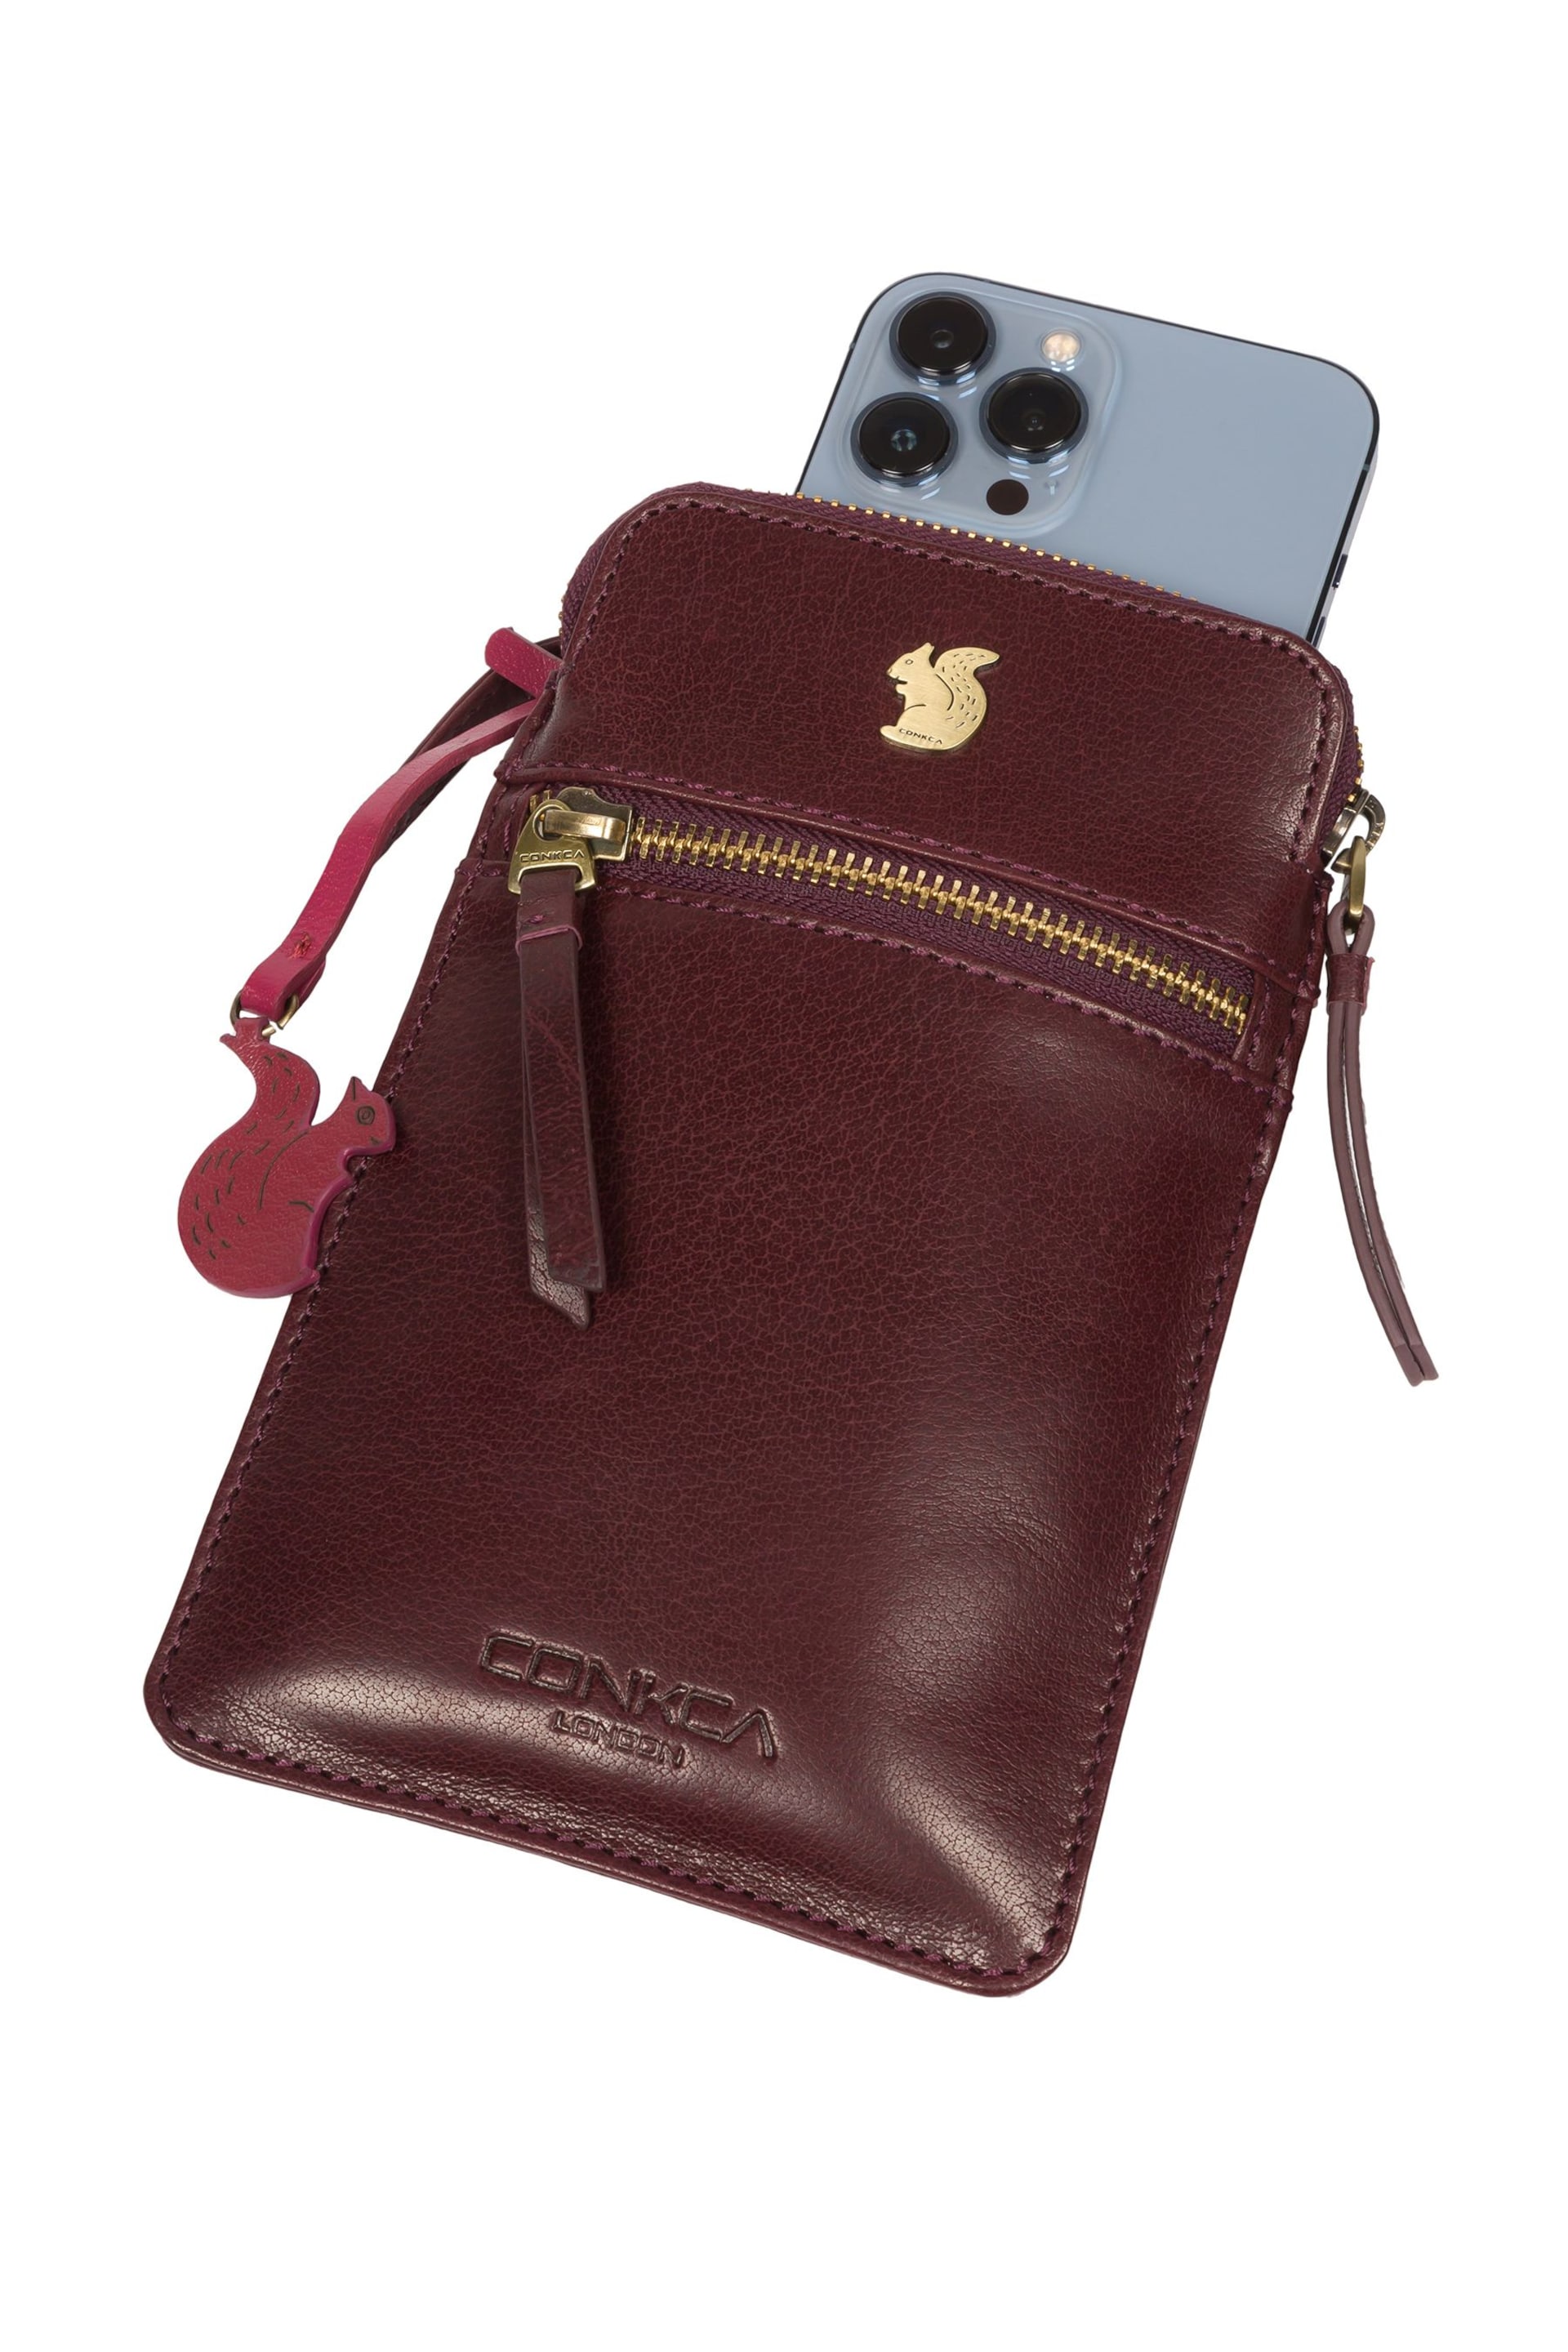 Conkca Bambino Leather Cross-Body Phone Bag - Image 9 of 9